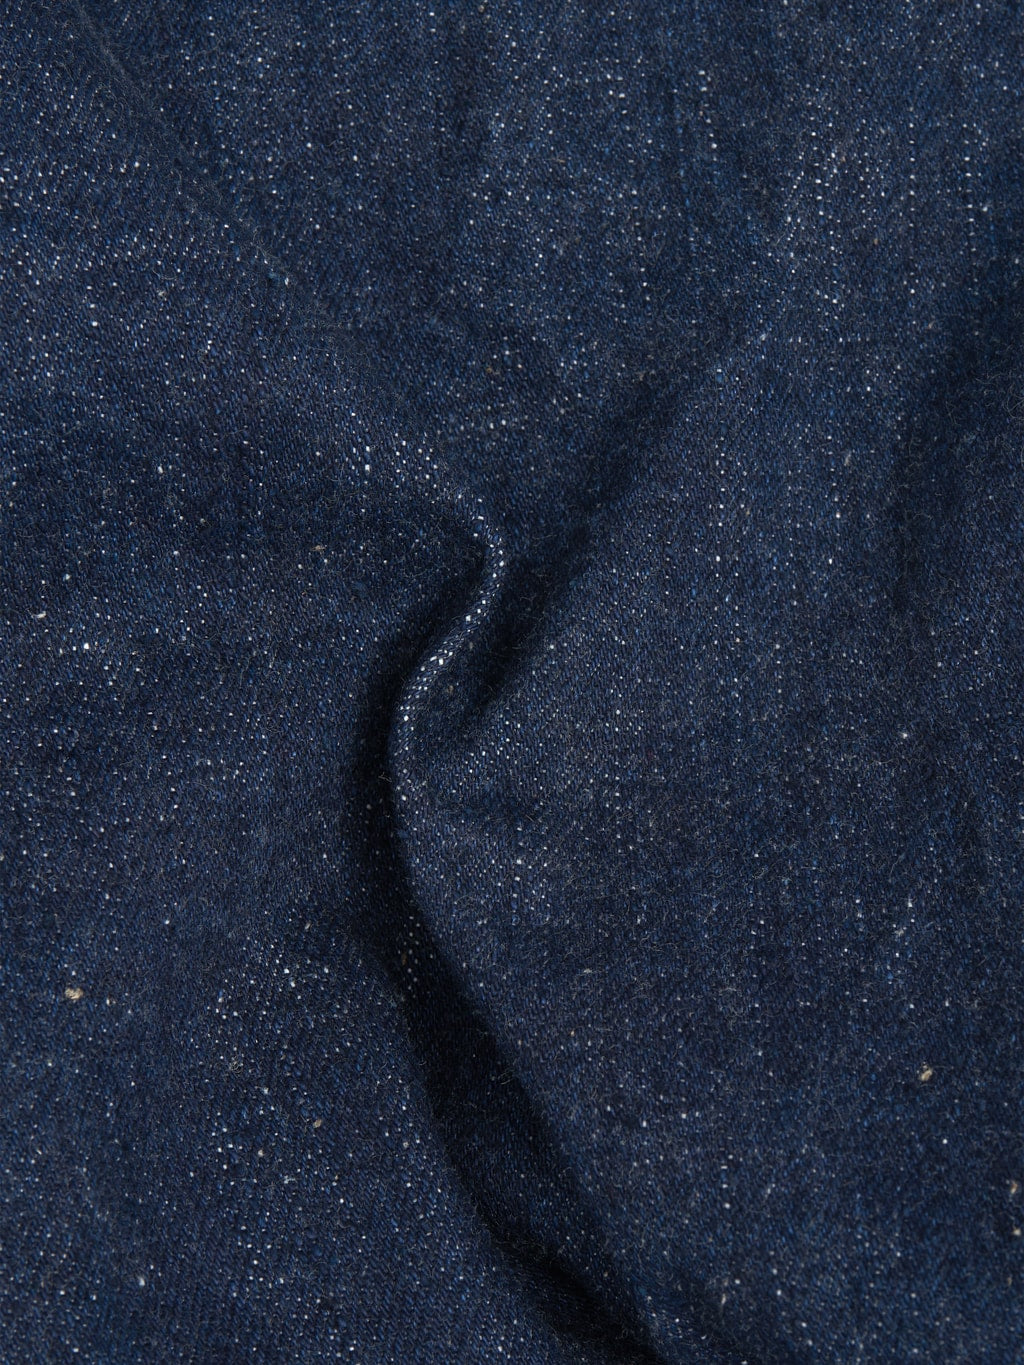 samurai jeans s211ax ai benkei natural indigo 18oz relaxed tapered jeans texture